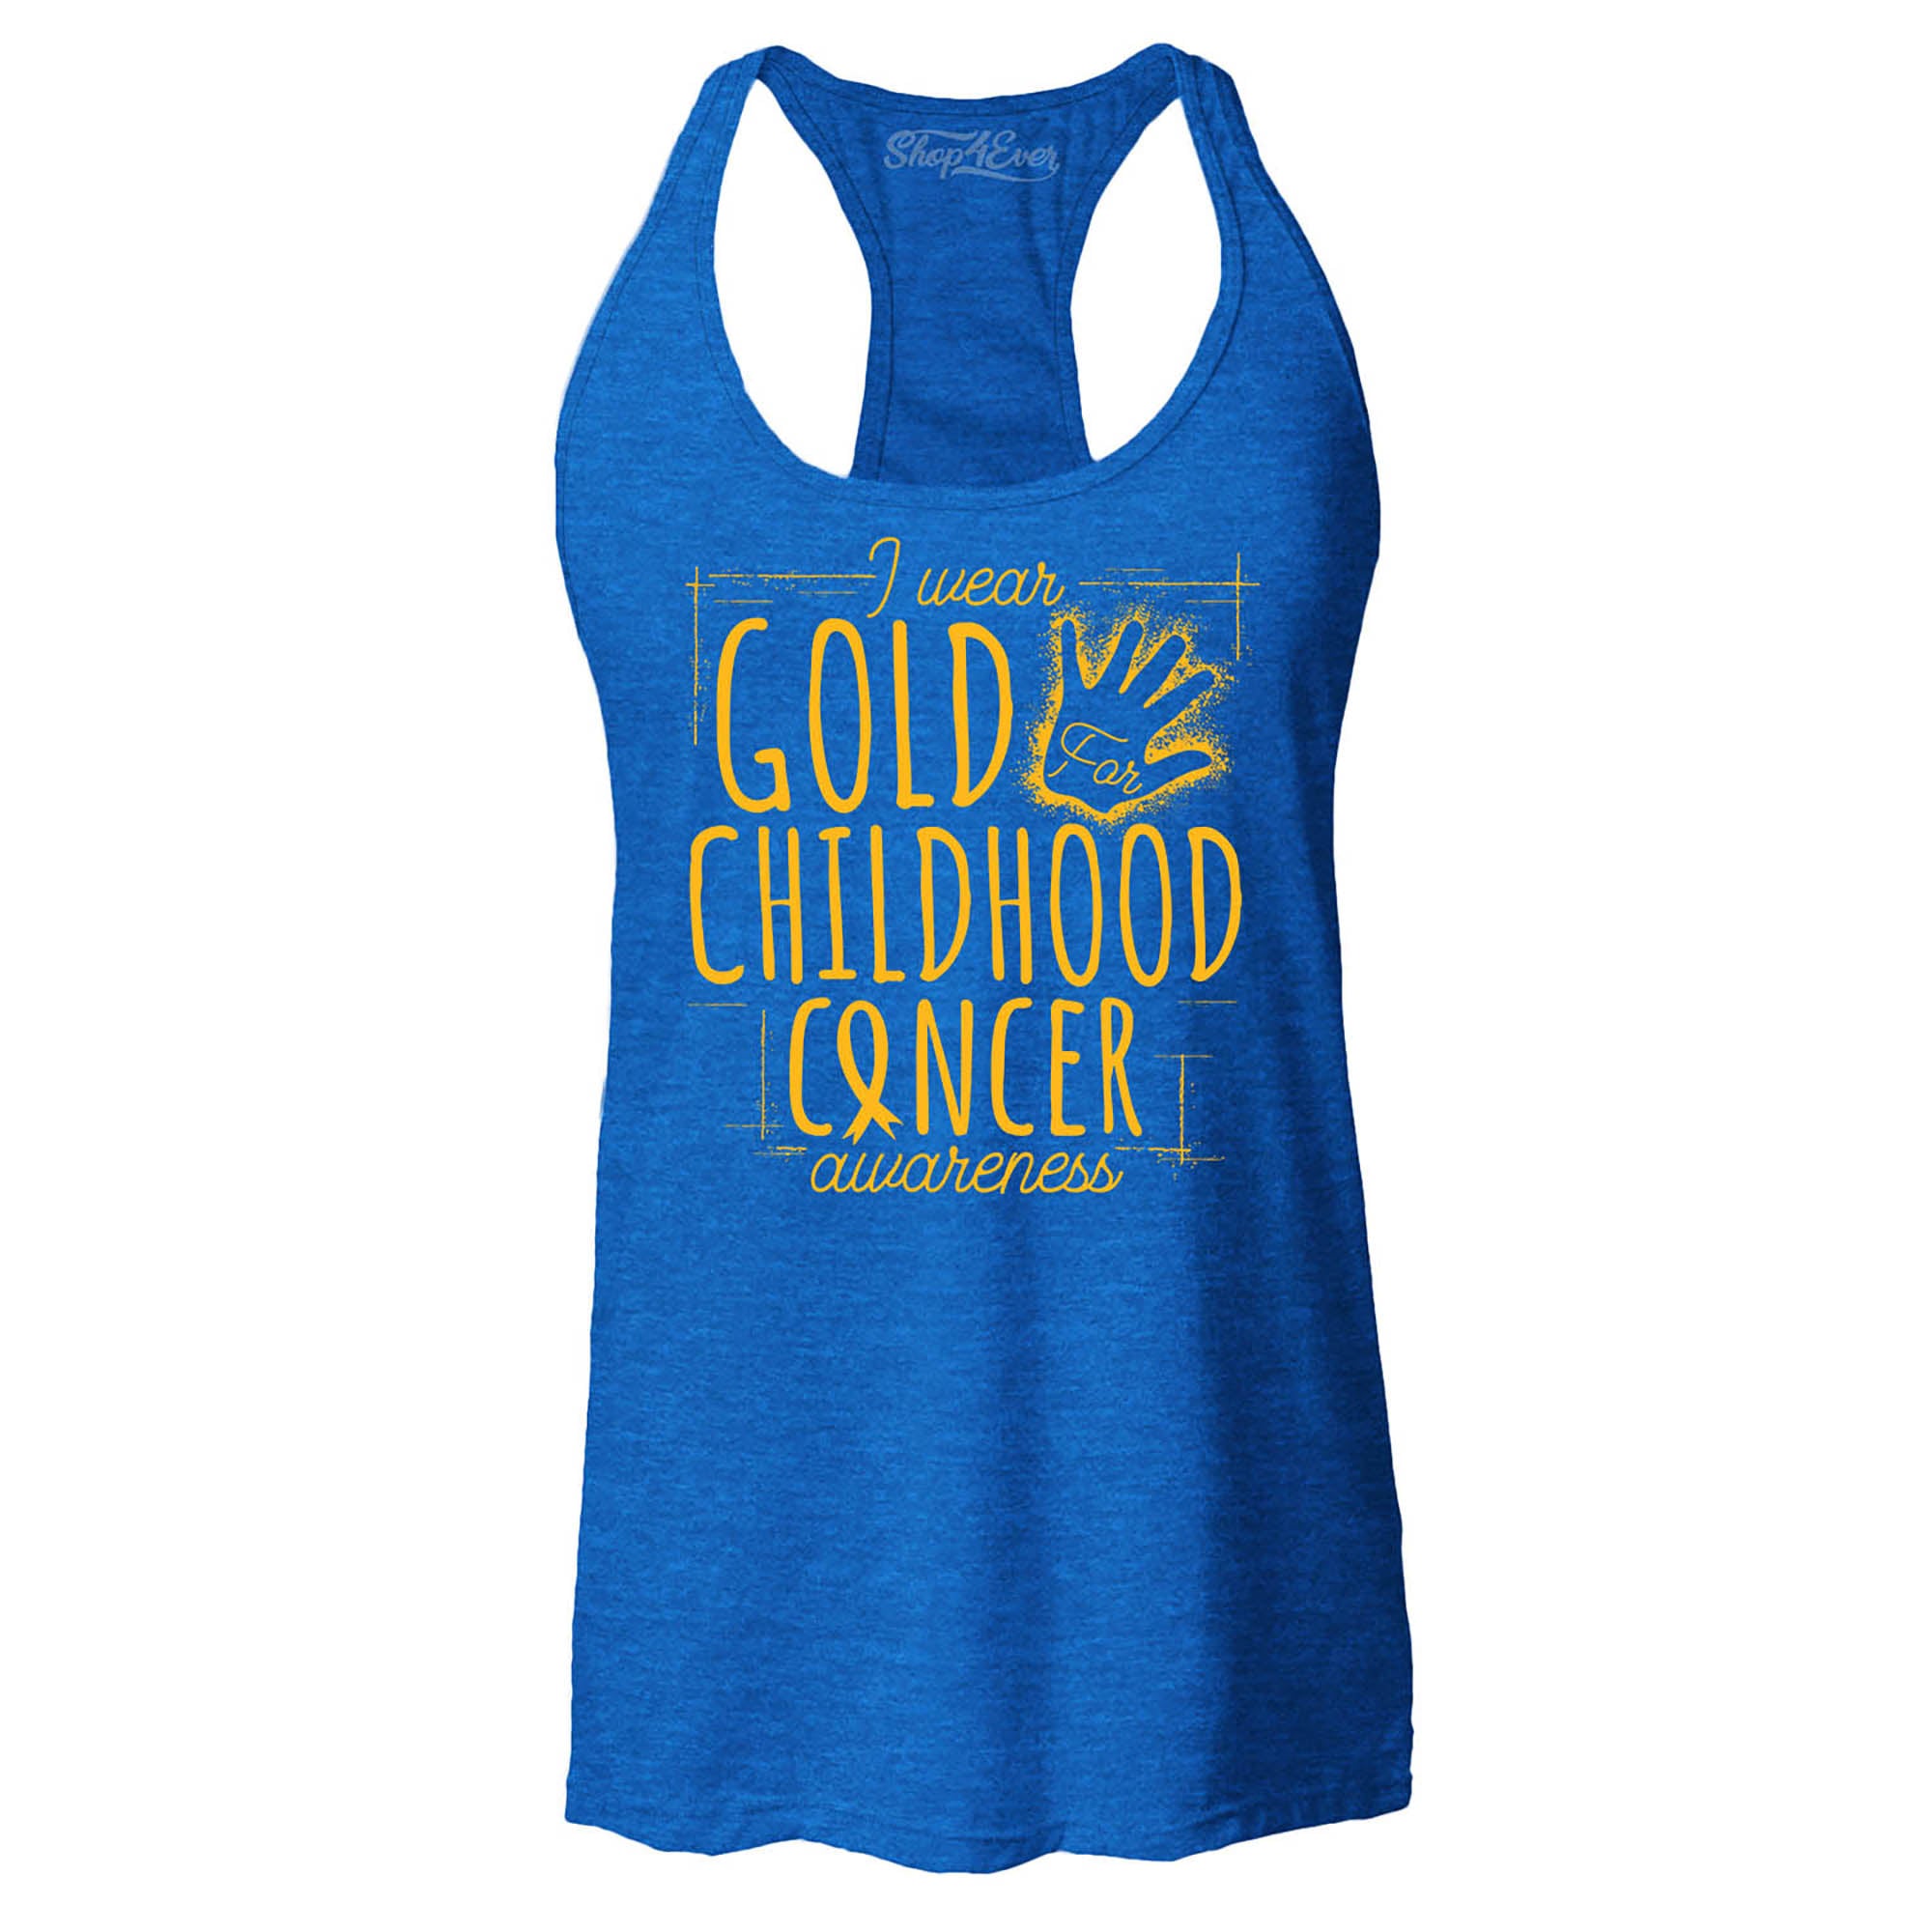 I Wear Gold for Childhood Cancer Awareness Women's Racerback Tank Top Slim Fit